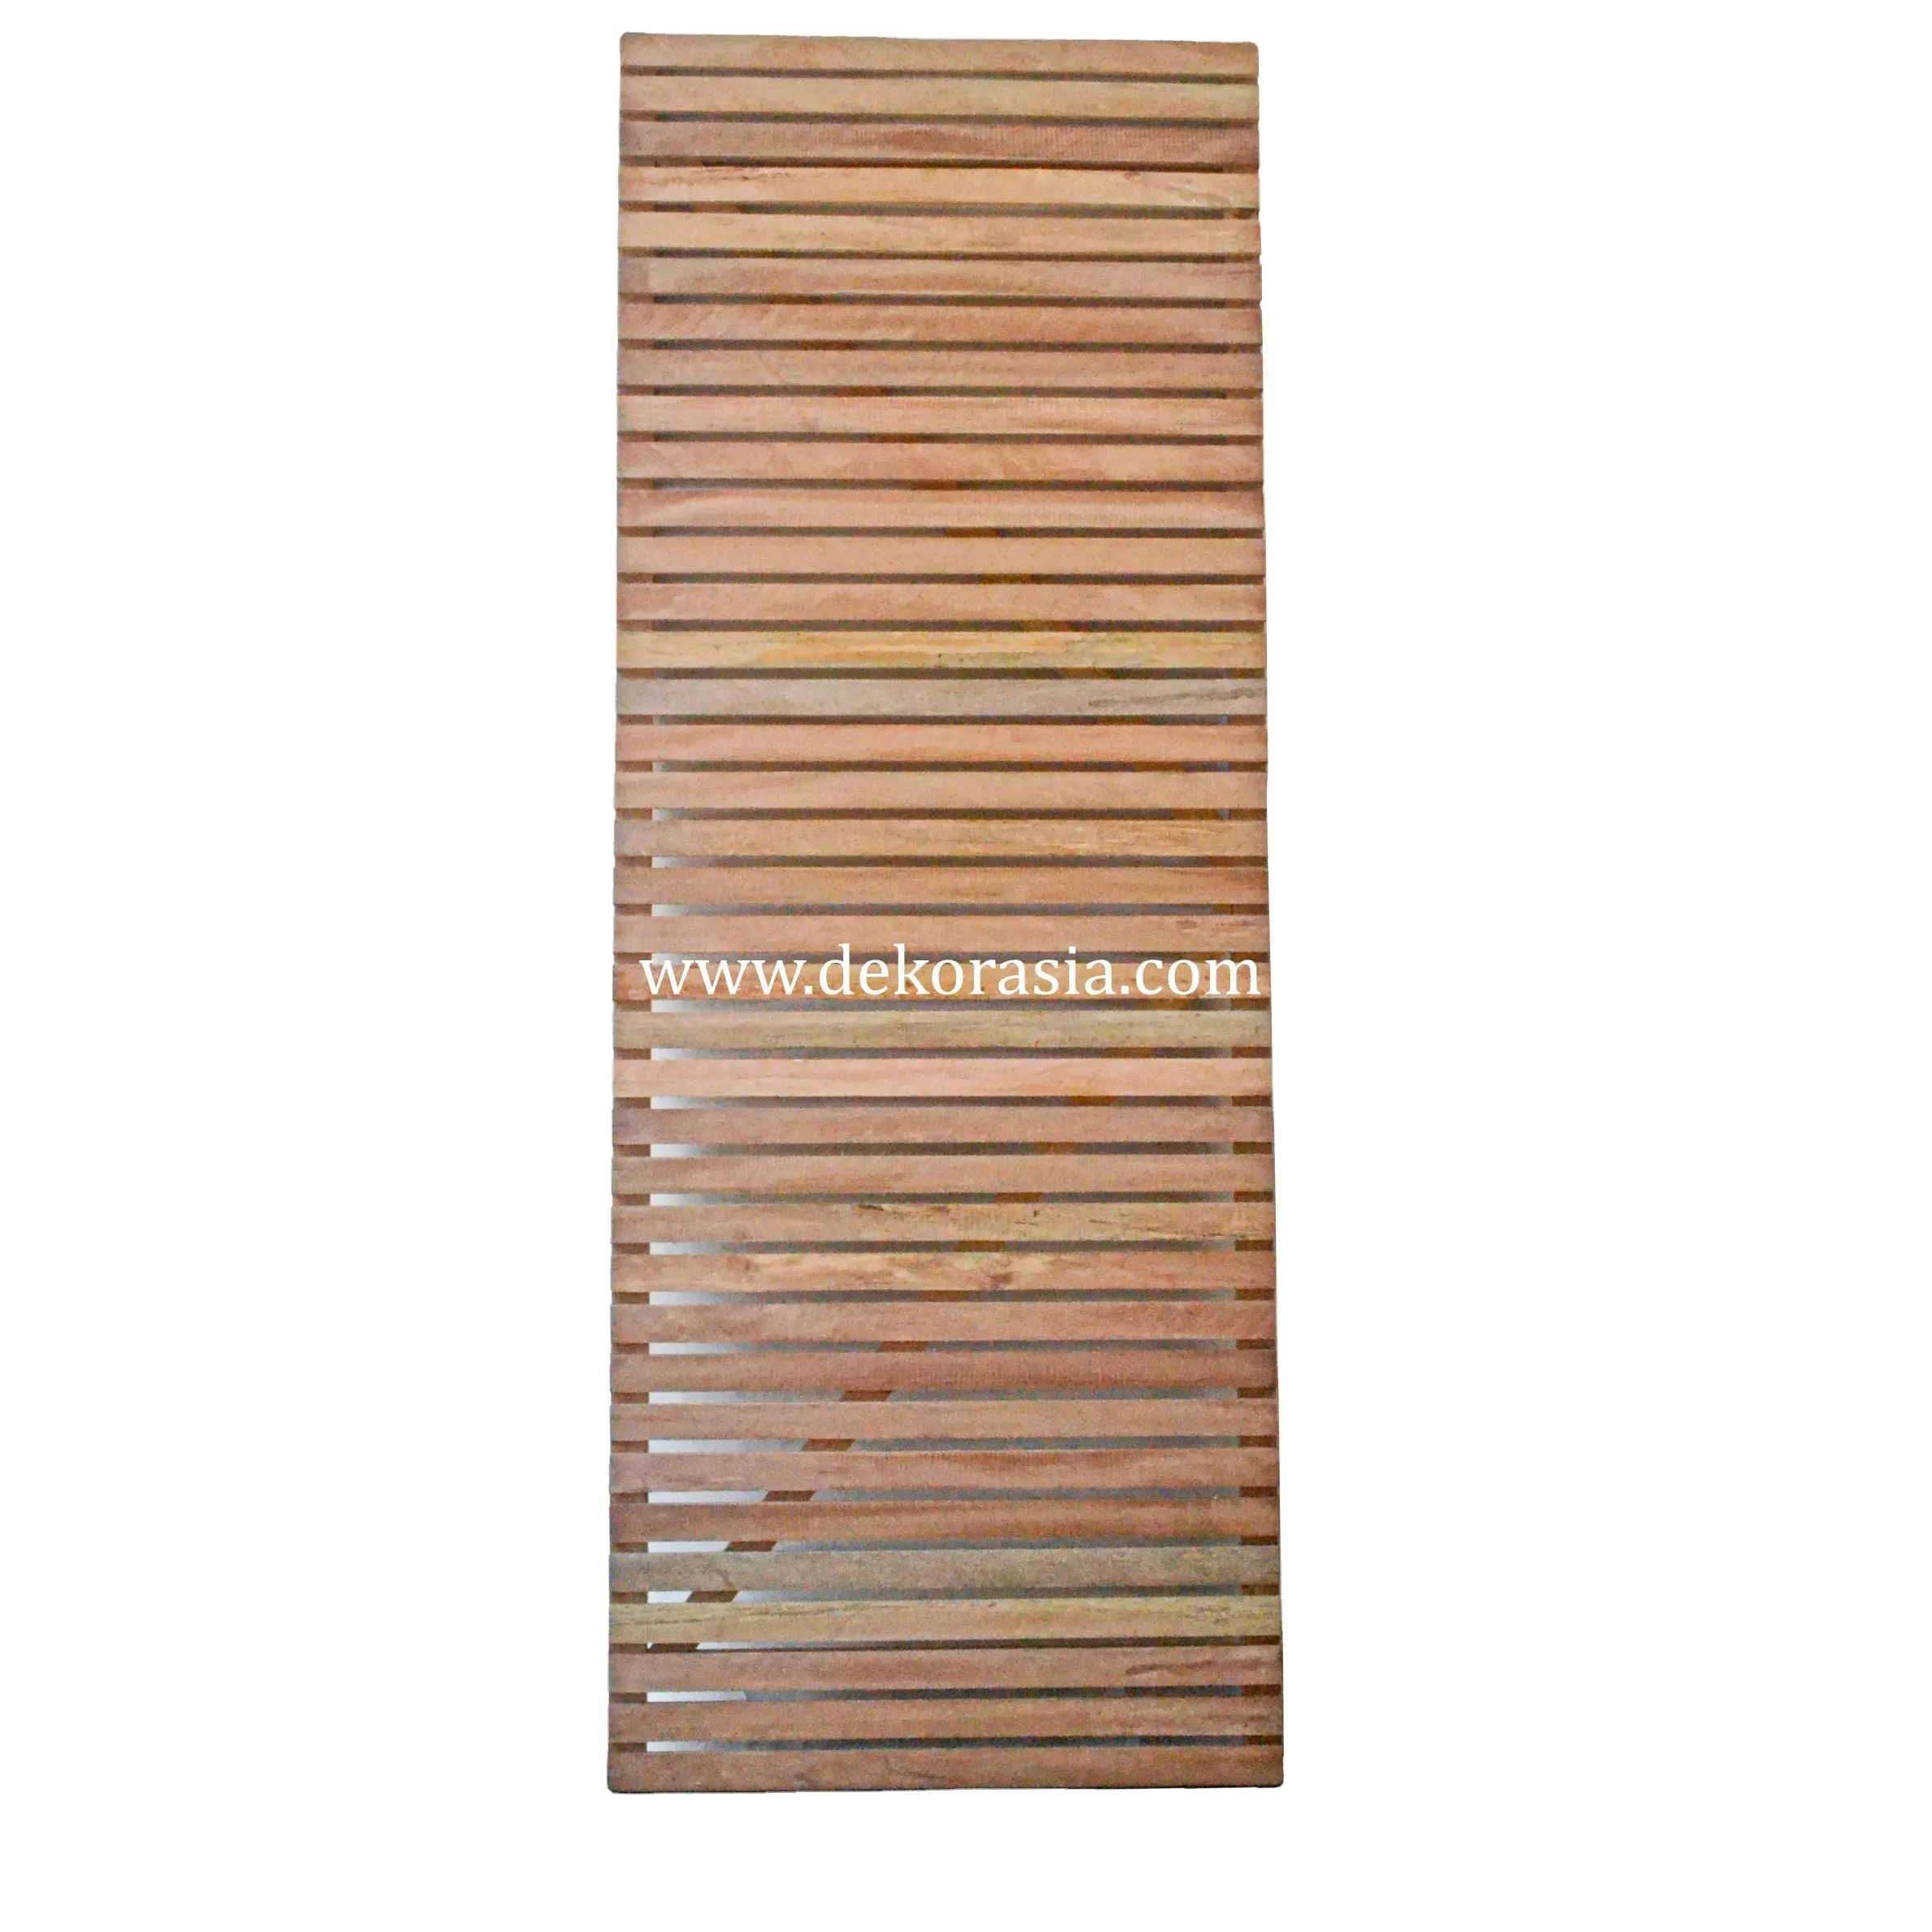 Vertikale/horizontale Meranti-Holzplatten. Holz gitter & Raumteiler, Holzzaun Innen-und Außen zaun platten